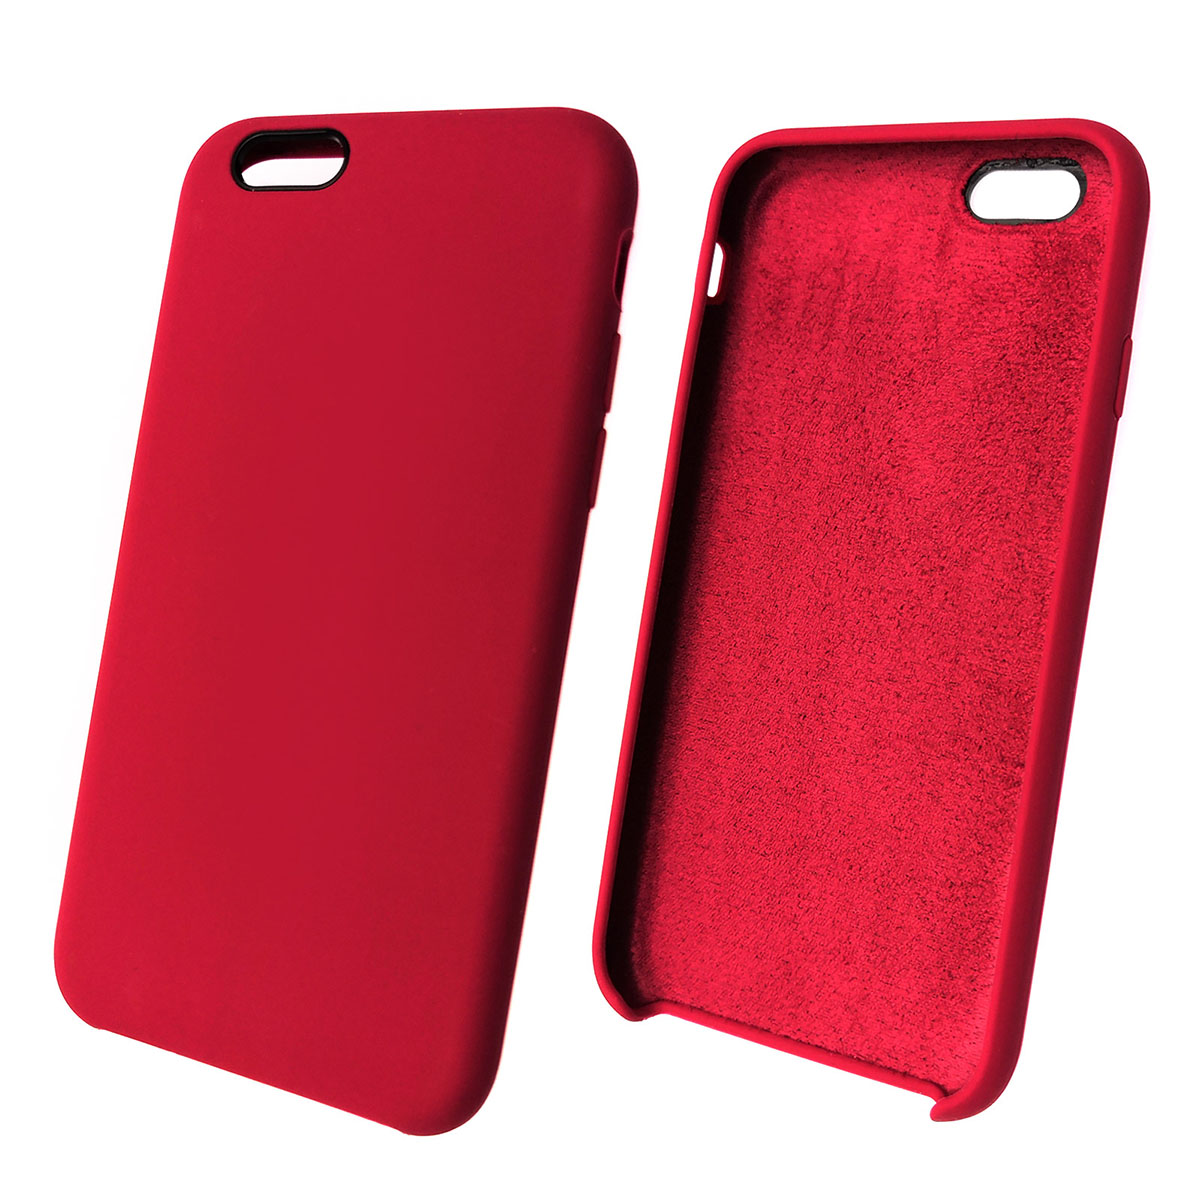 Чехол накладка Silicon Case для APPLE iPhone 6, 6G, 6S, силикон, бархат, цвет красная роза.